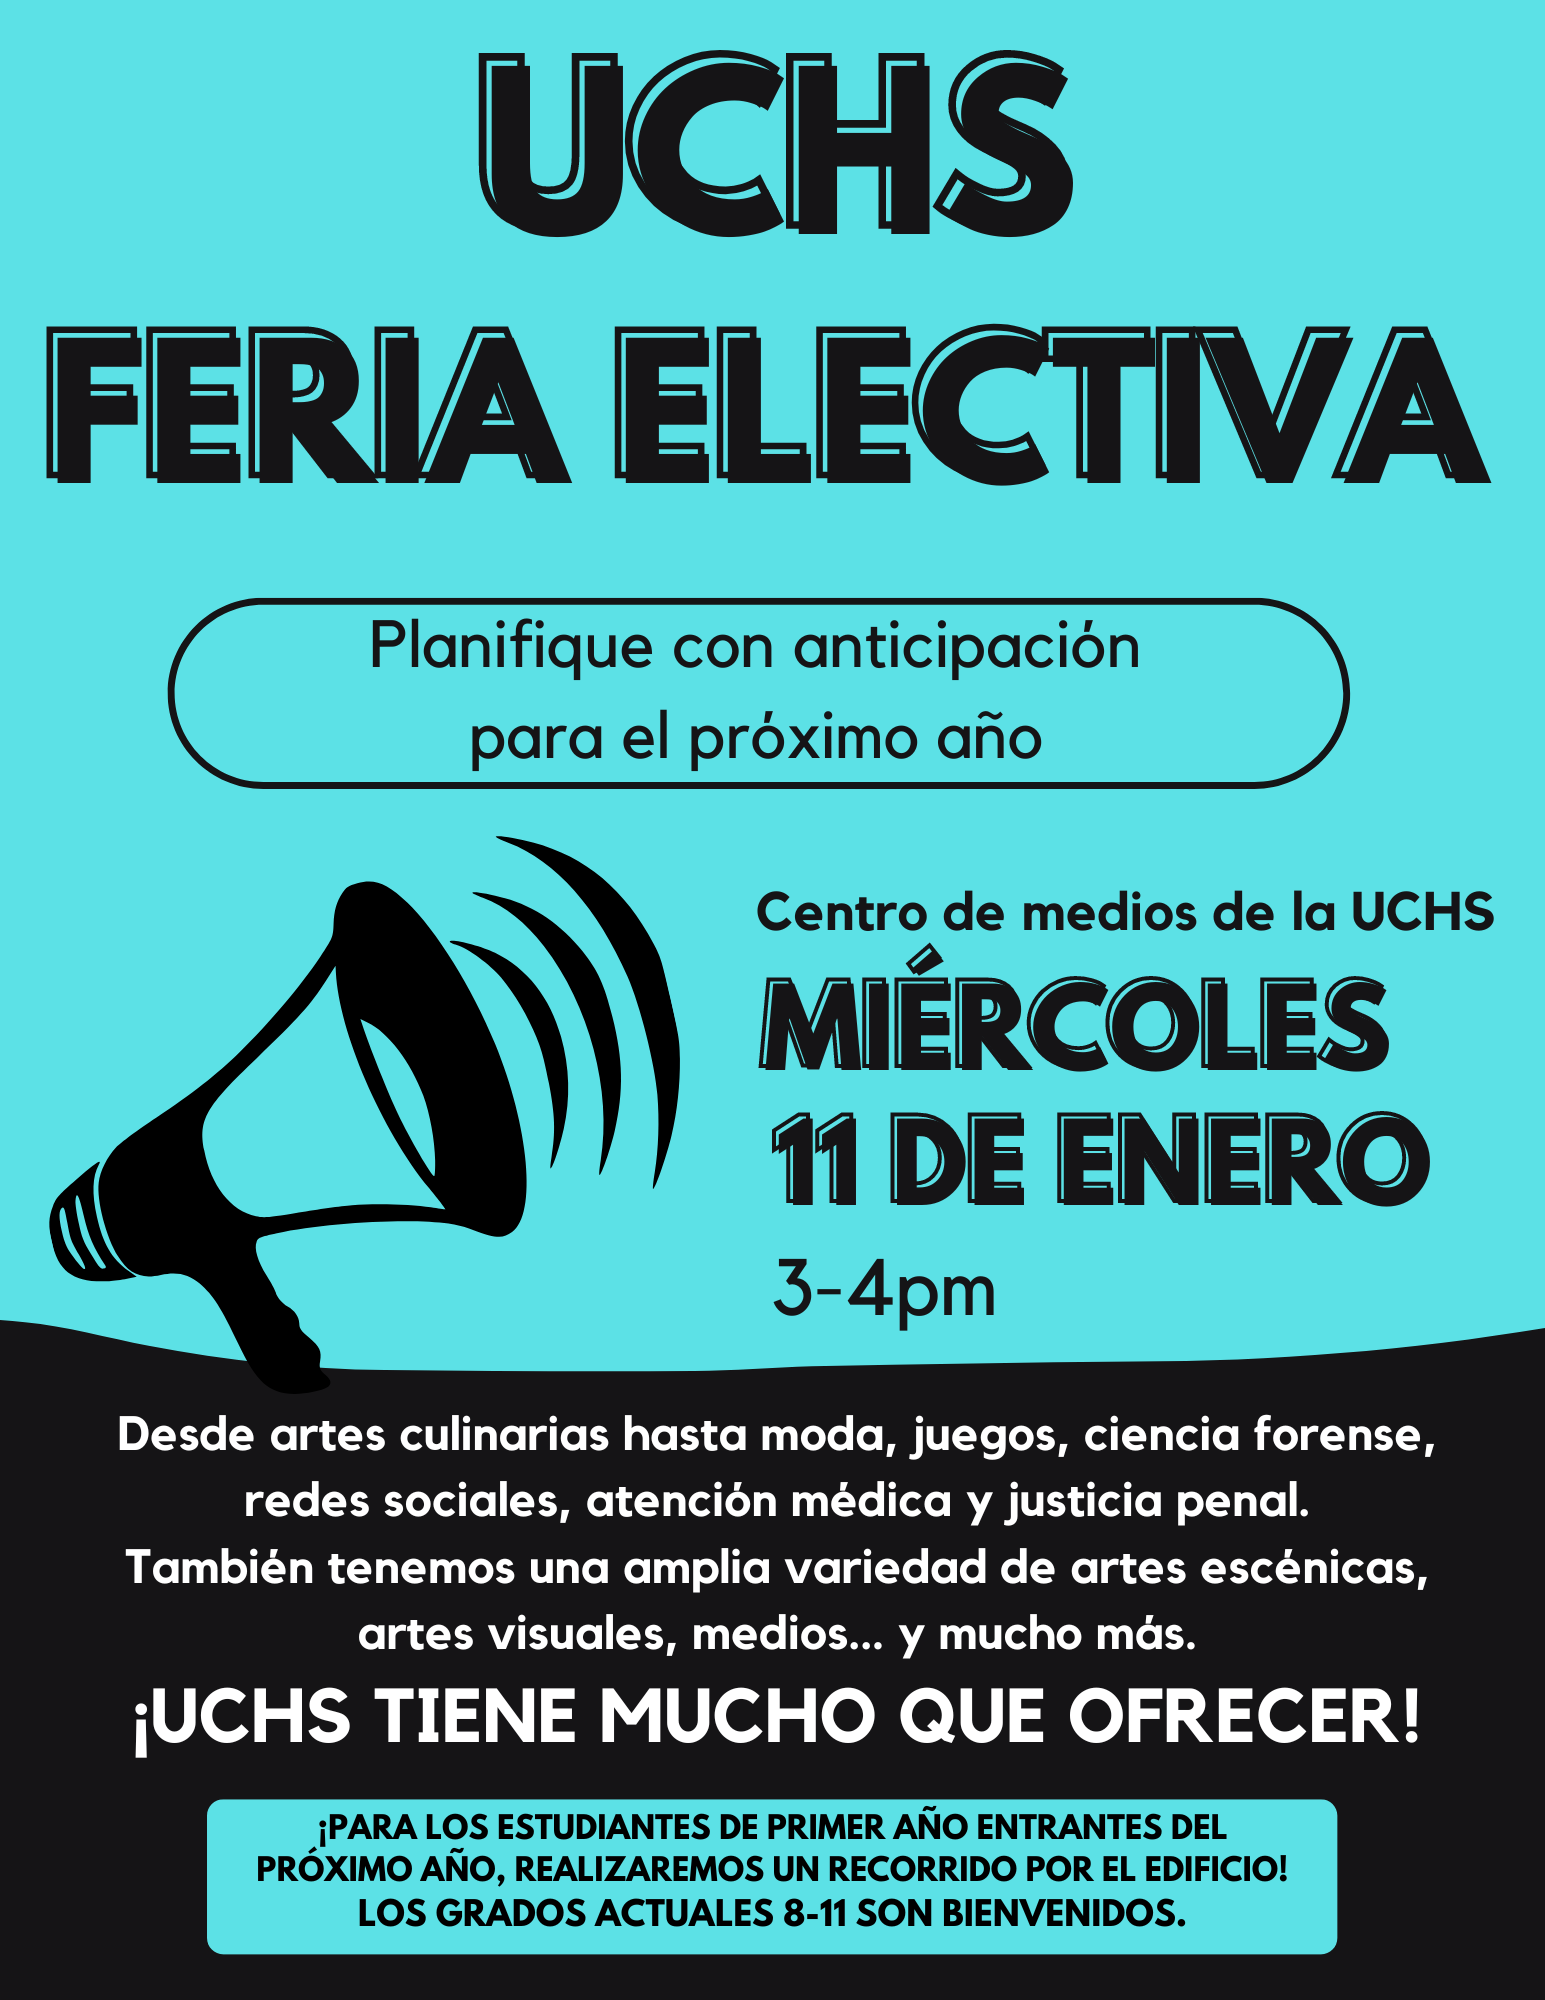 Union City High School Elective Fair-Reminder-Spanish